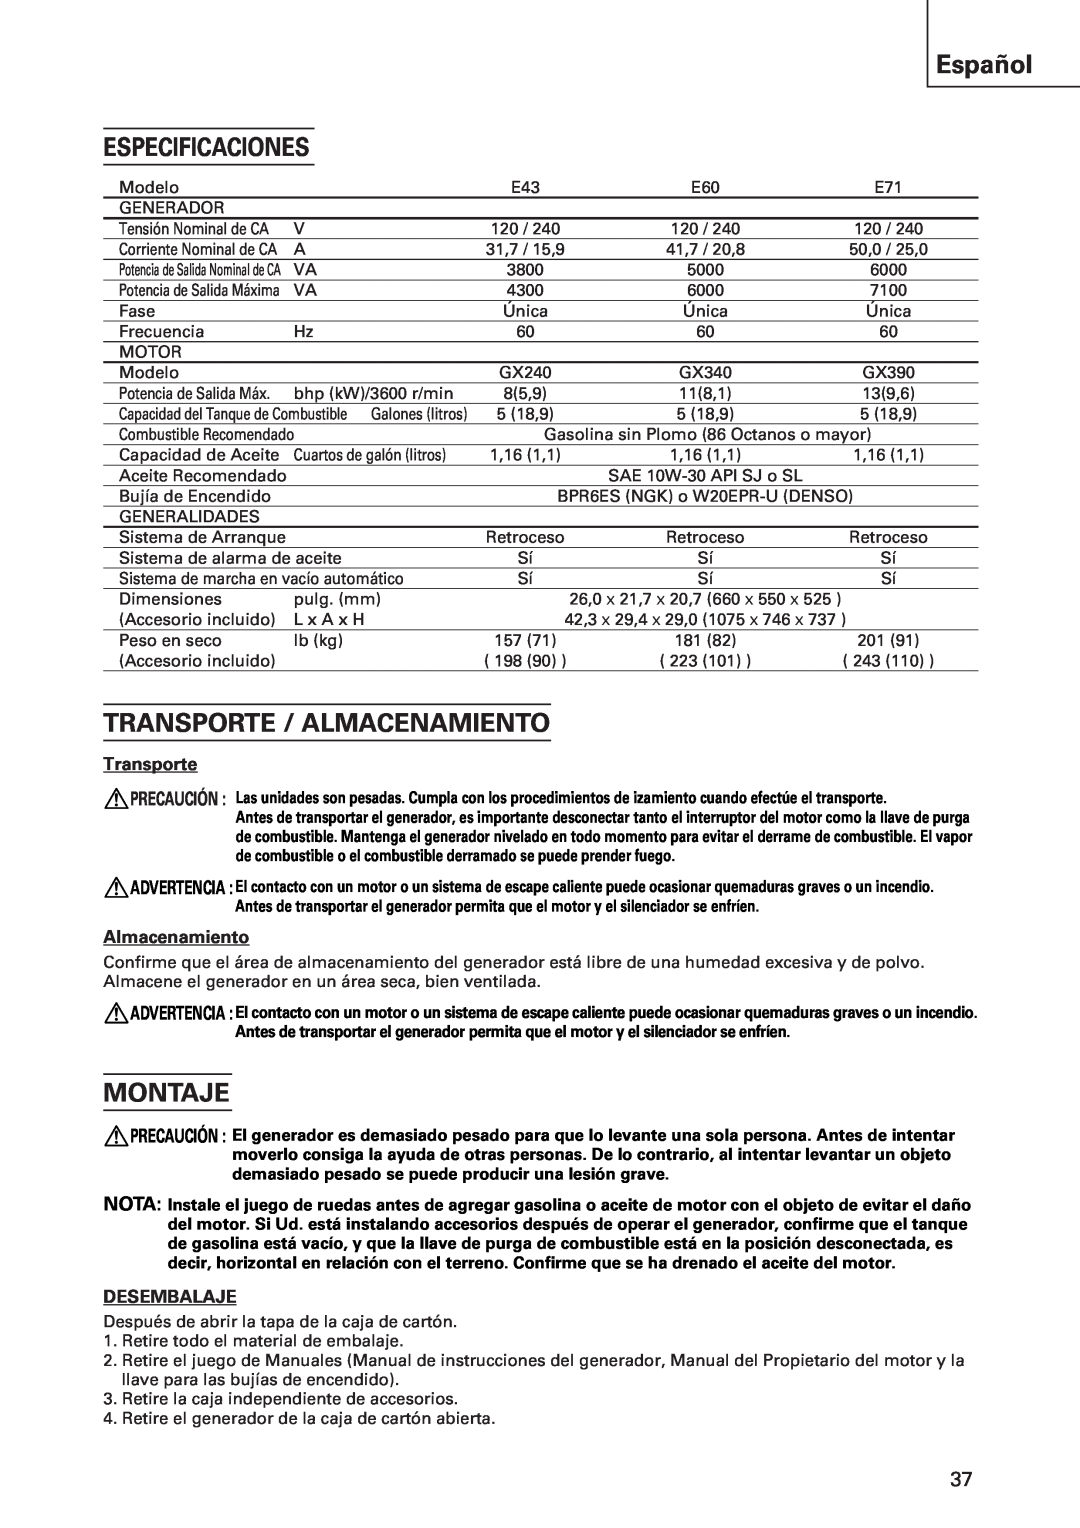 Hitachi E43 instruction manual Español ESPECIFICACIONES, Transporte / Almacenamiento, Montaje, Desembalaje 